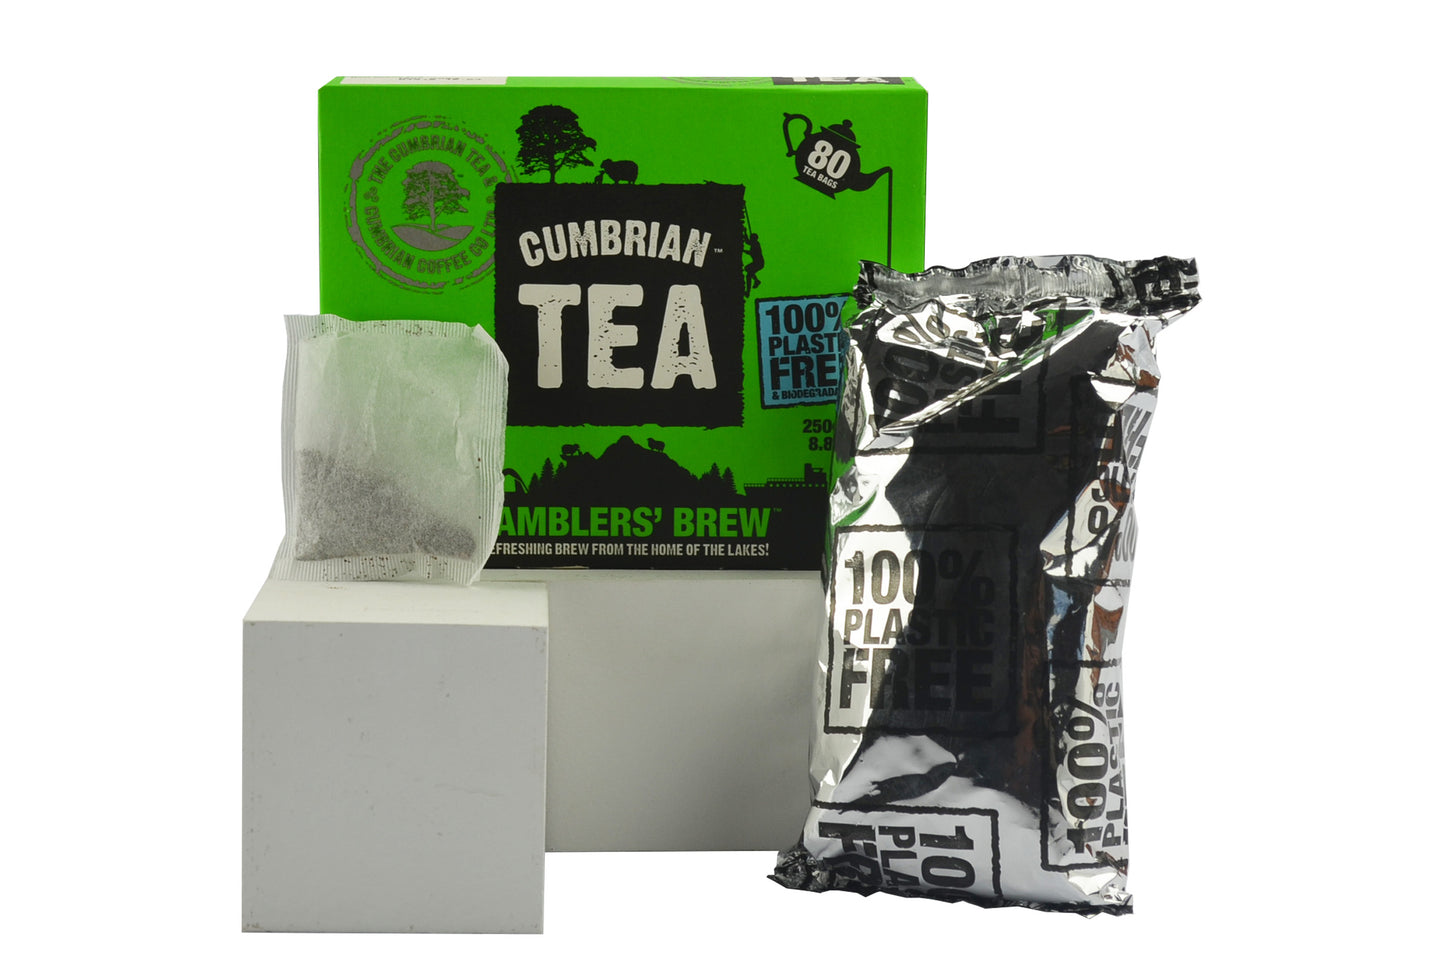 Cumbrian Tea - Ramblers Brew - 80 Teabags